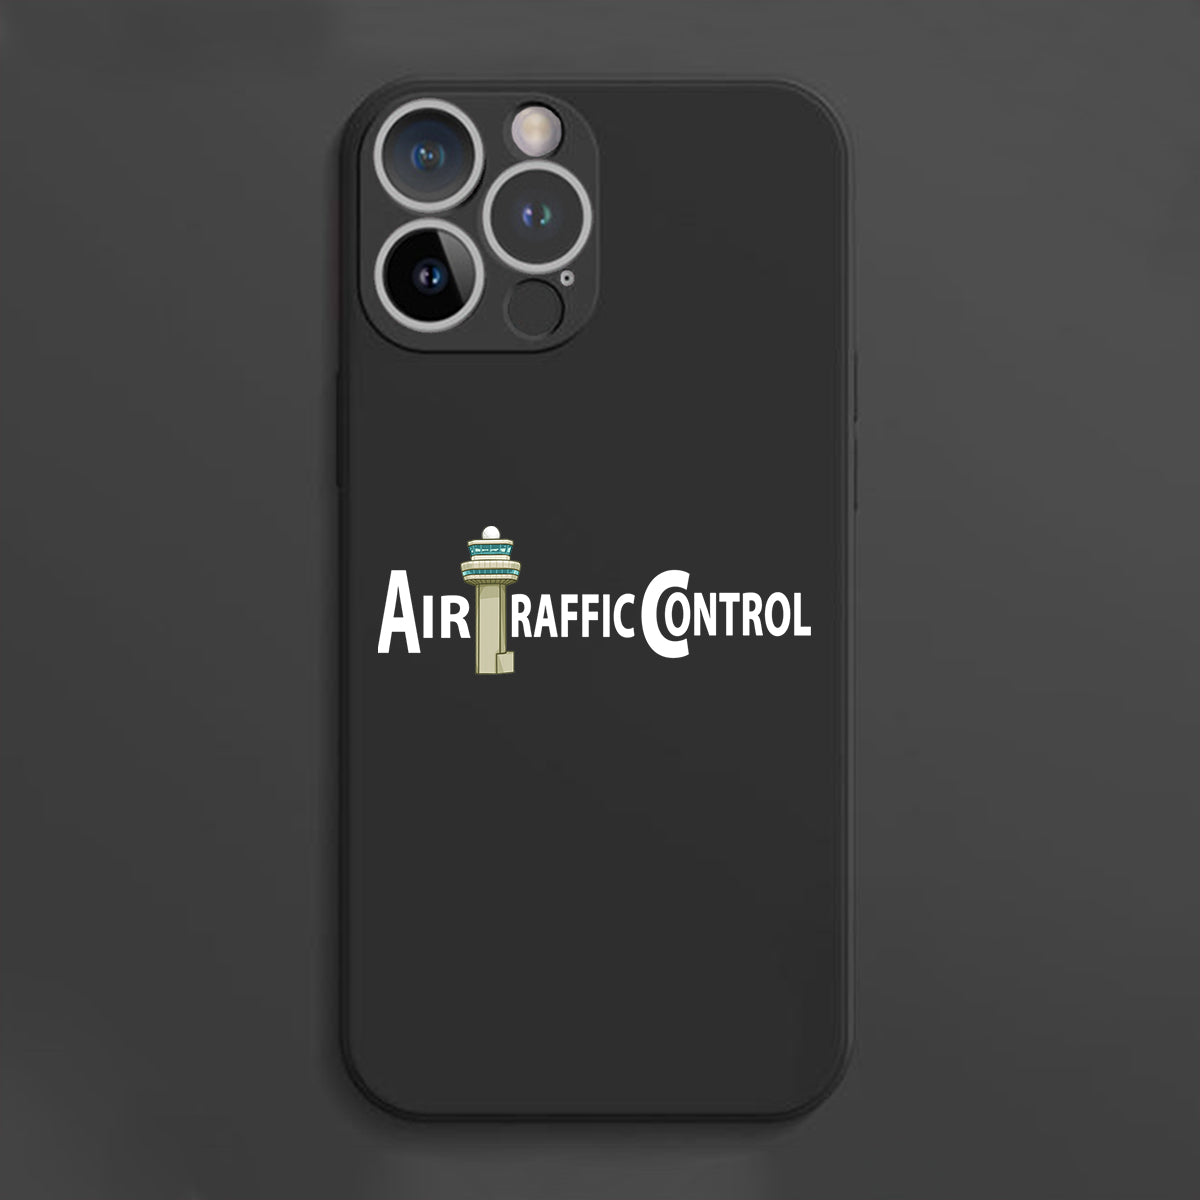 Air Traffic Control Designed Soft Silicone iPhone Cases